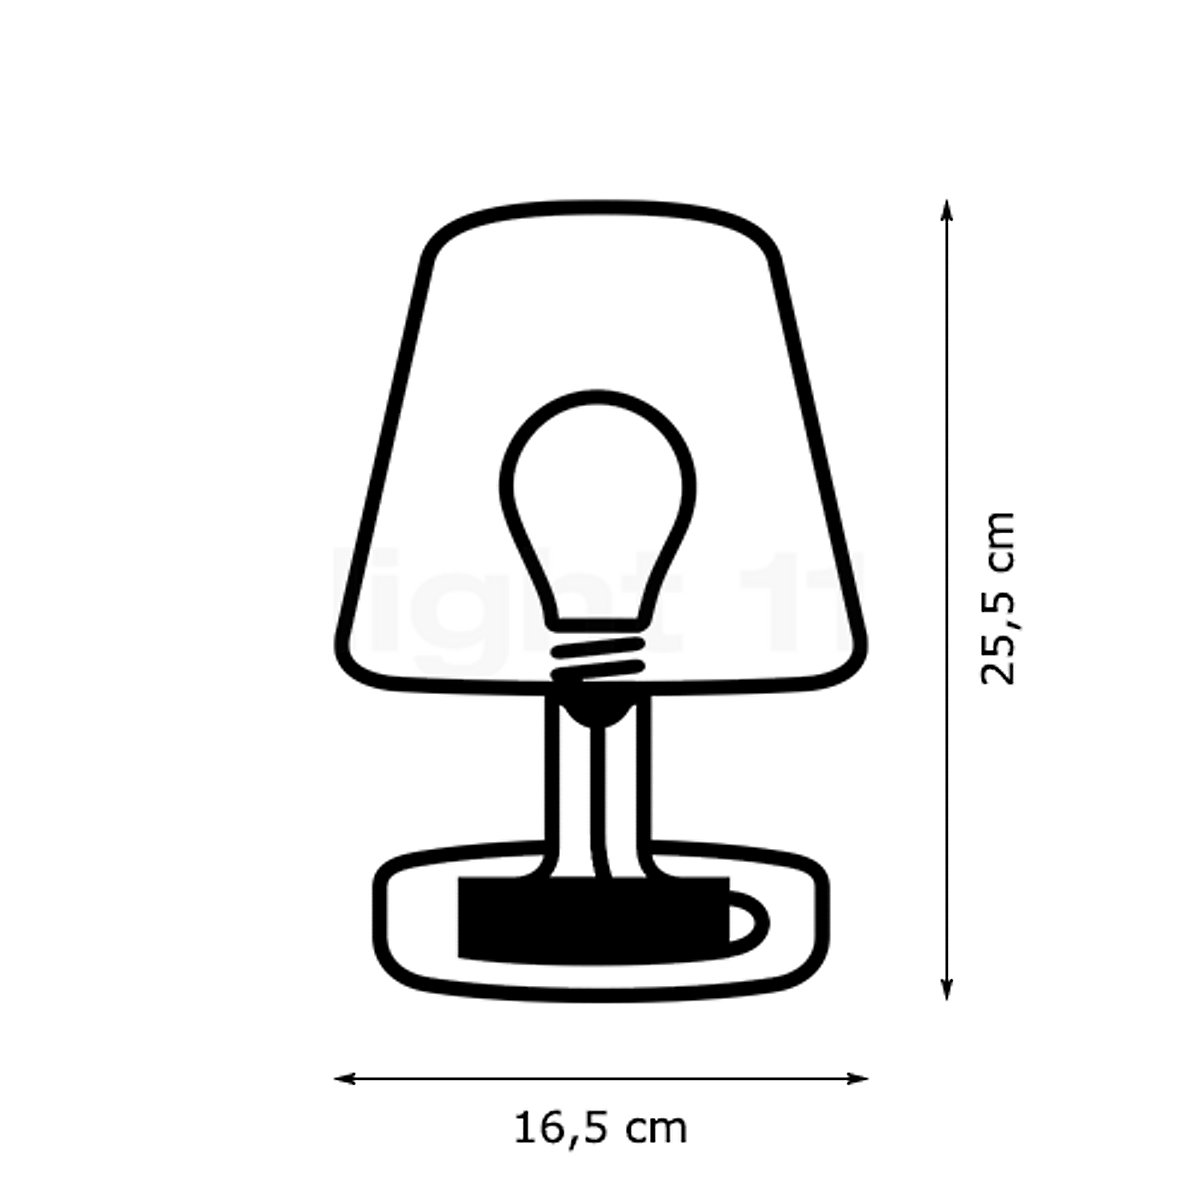 Fatboy Transloetje LED kaufen bei light11.de